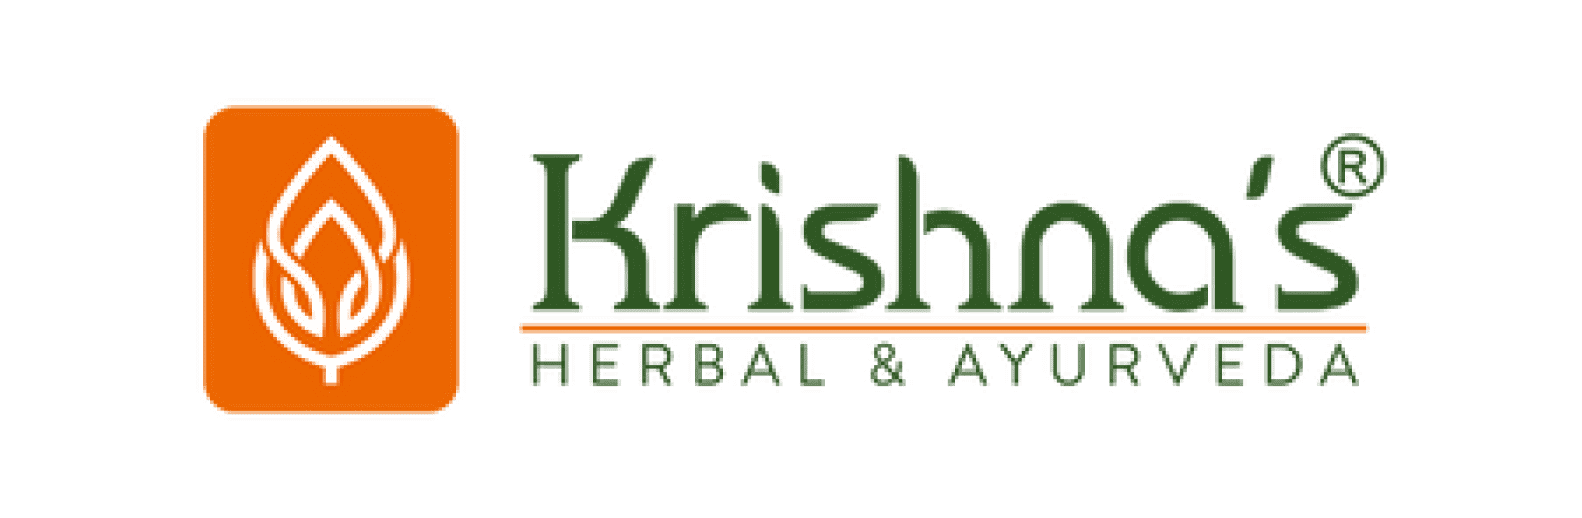 krishna's